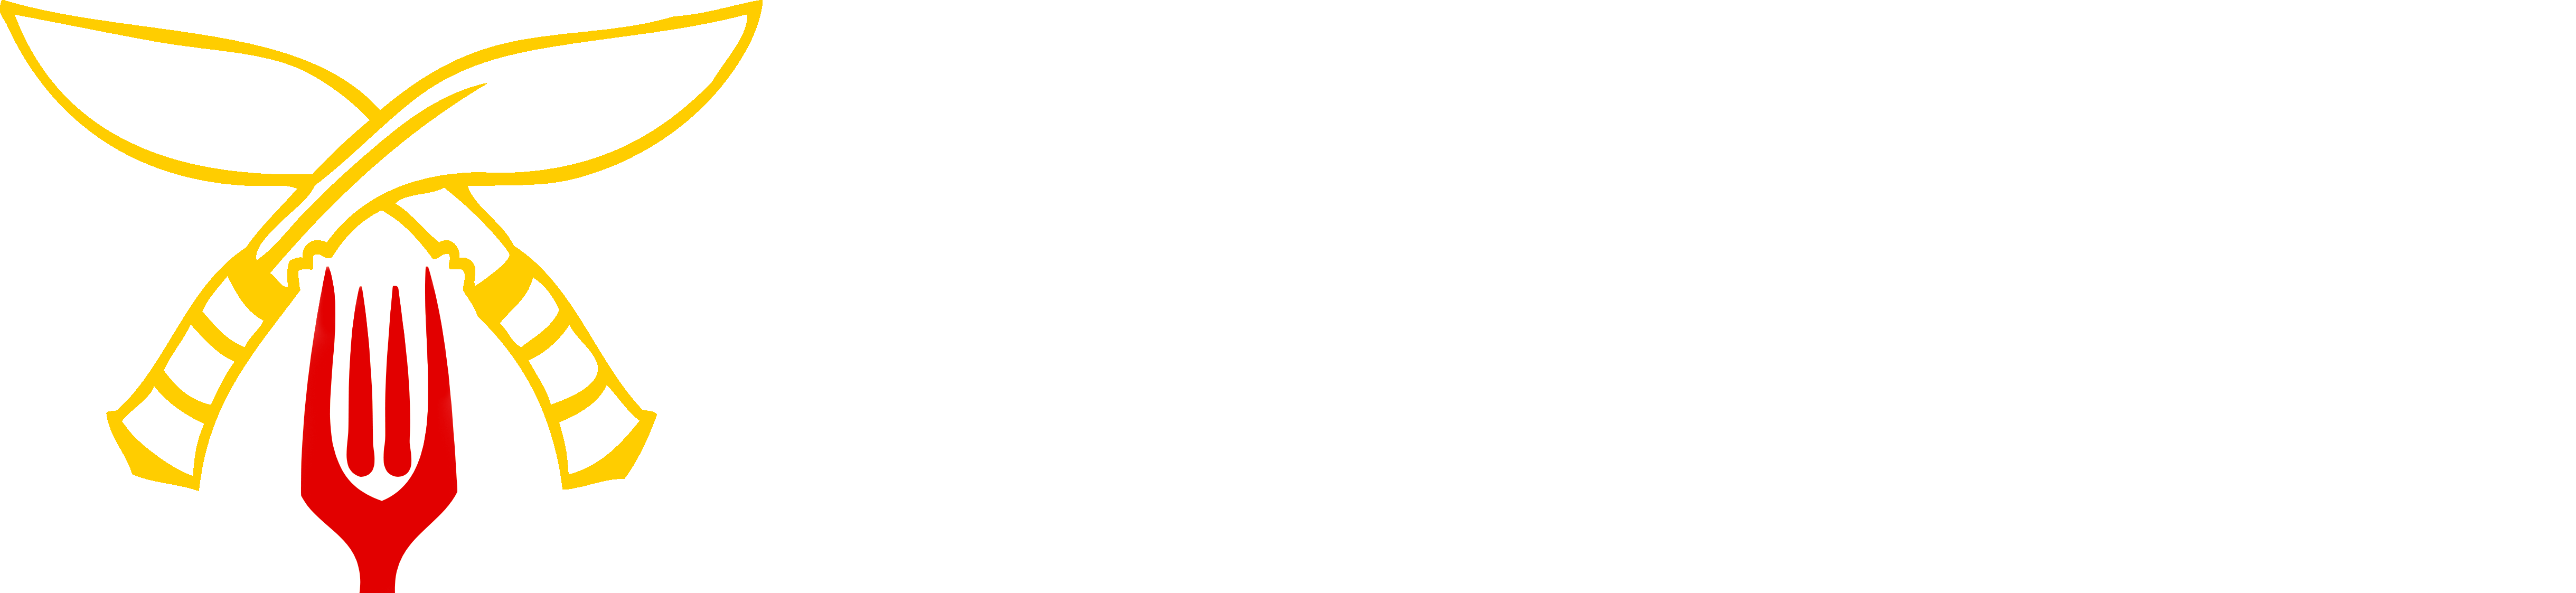 Spice of Nepal